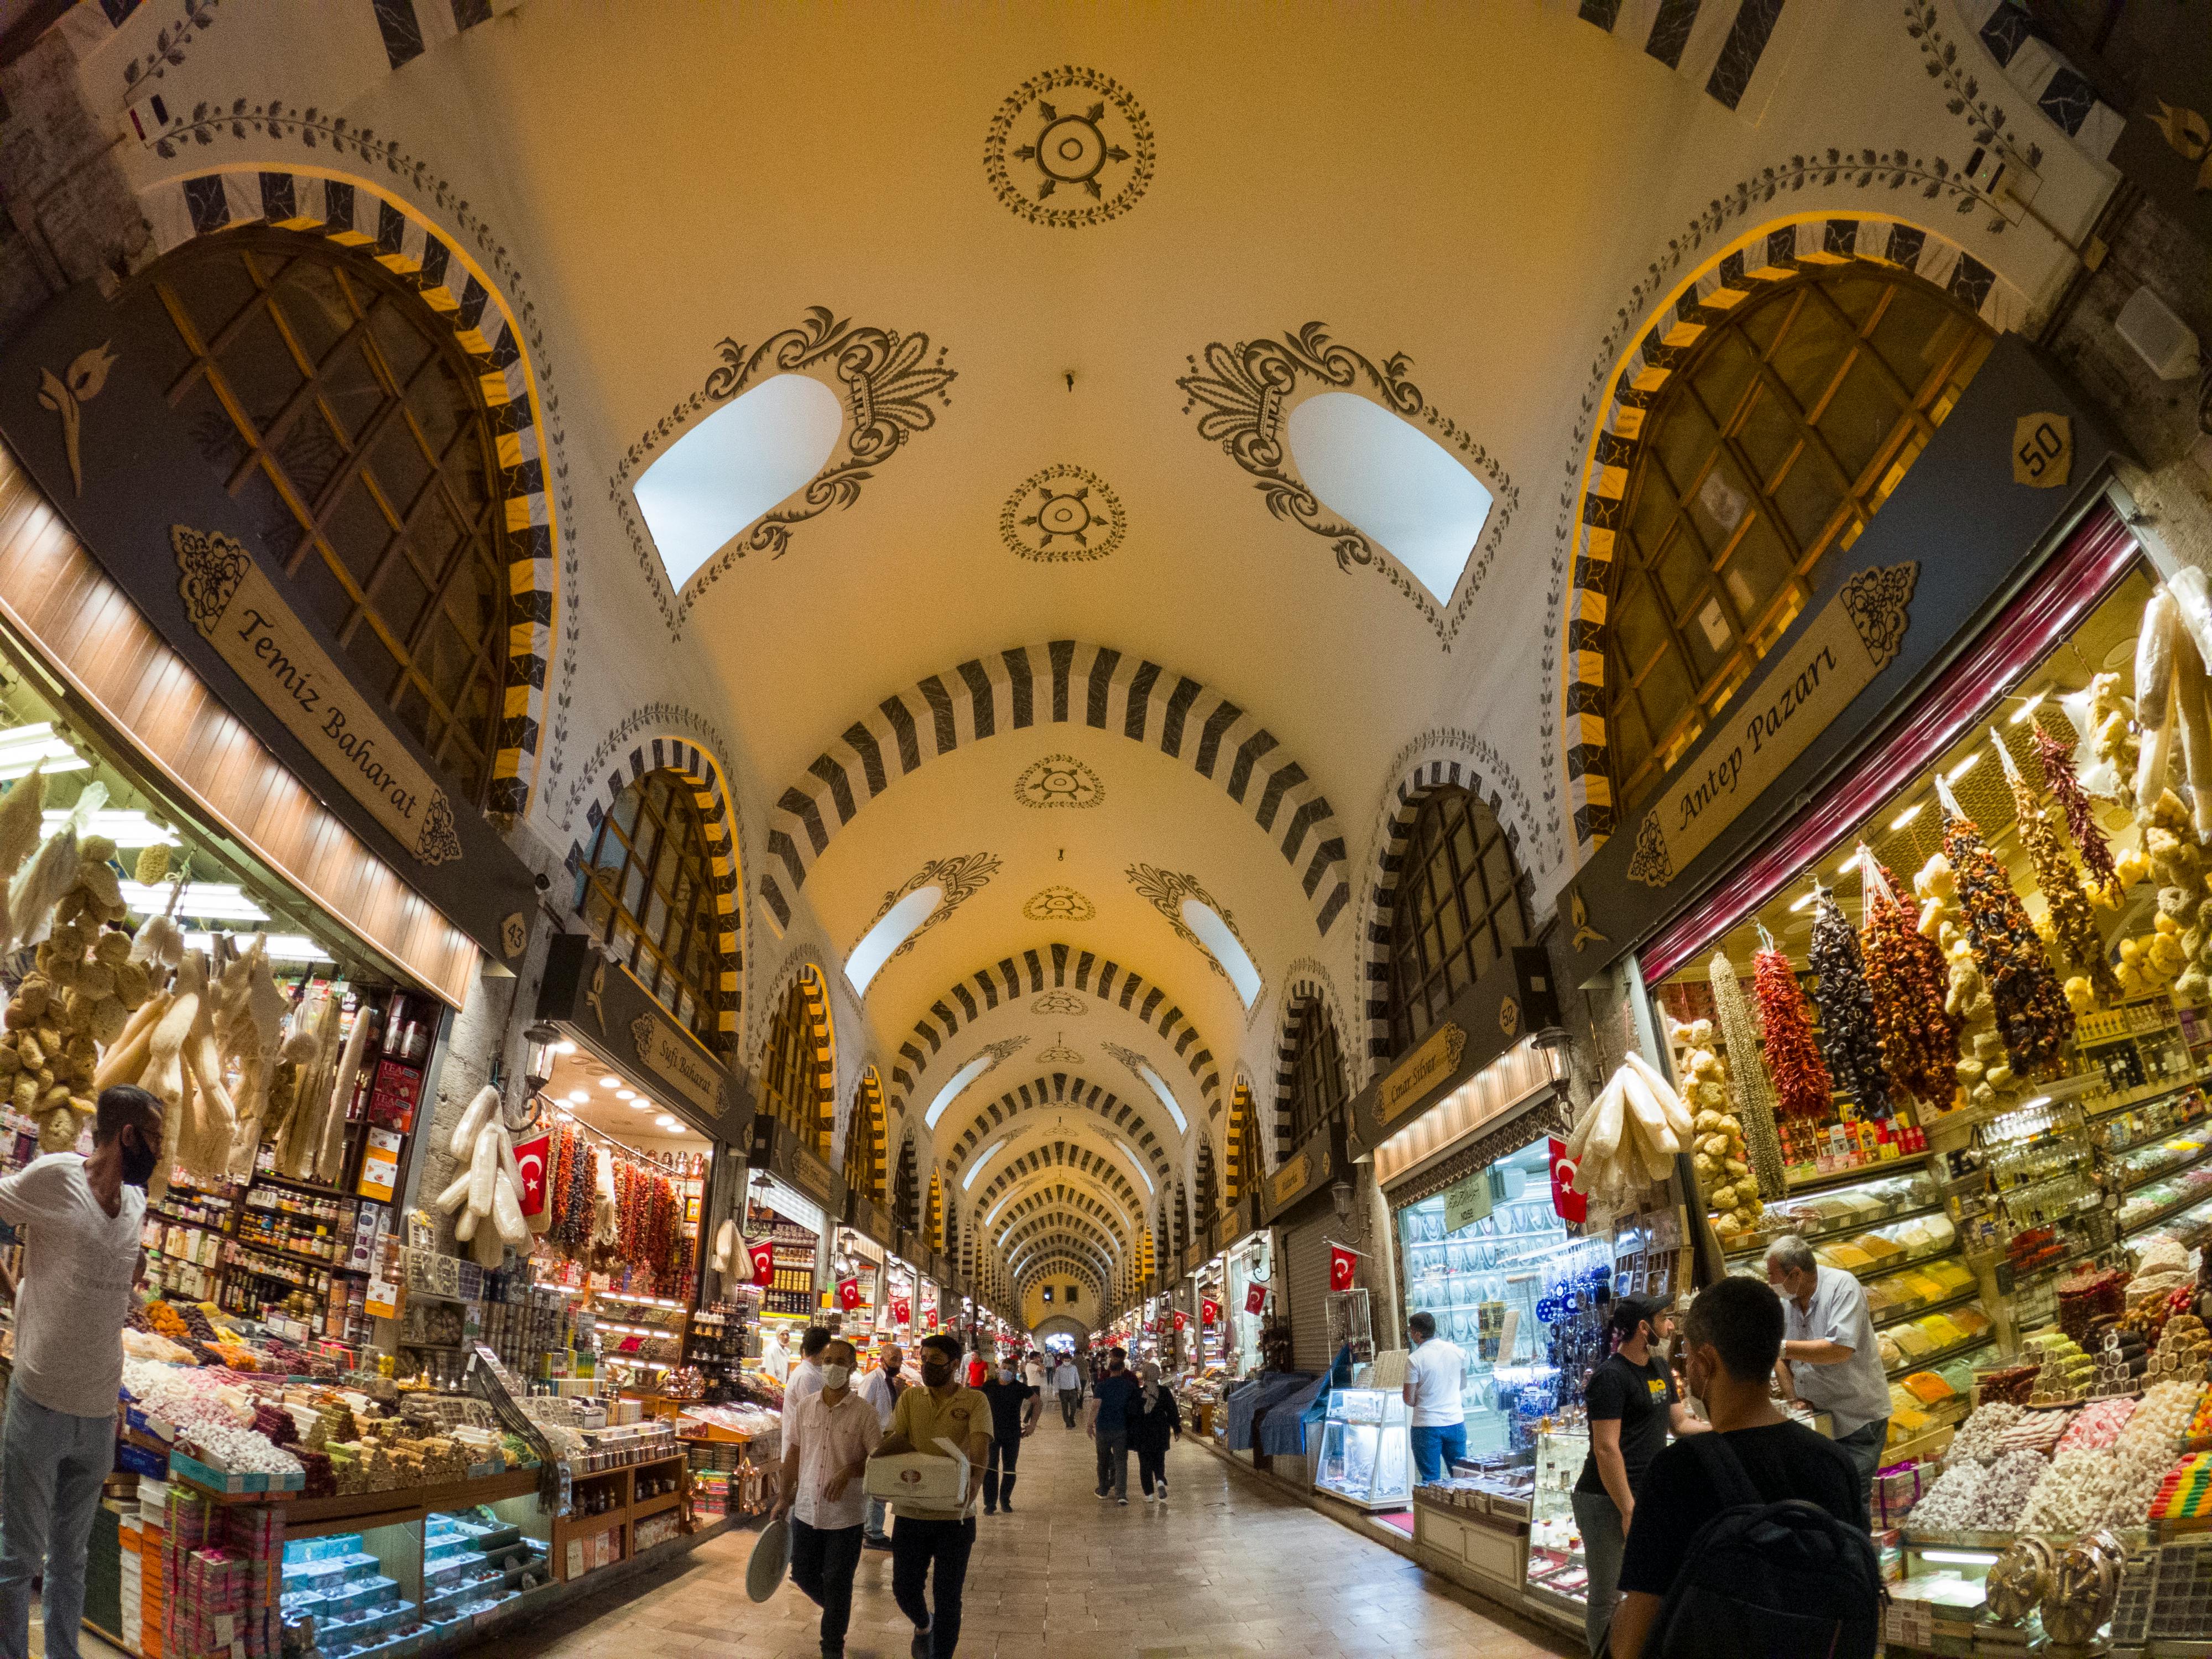 Visão geral dos mercados de rua de Istambul